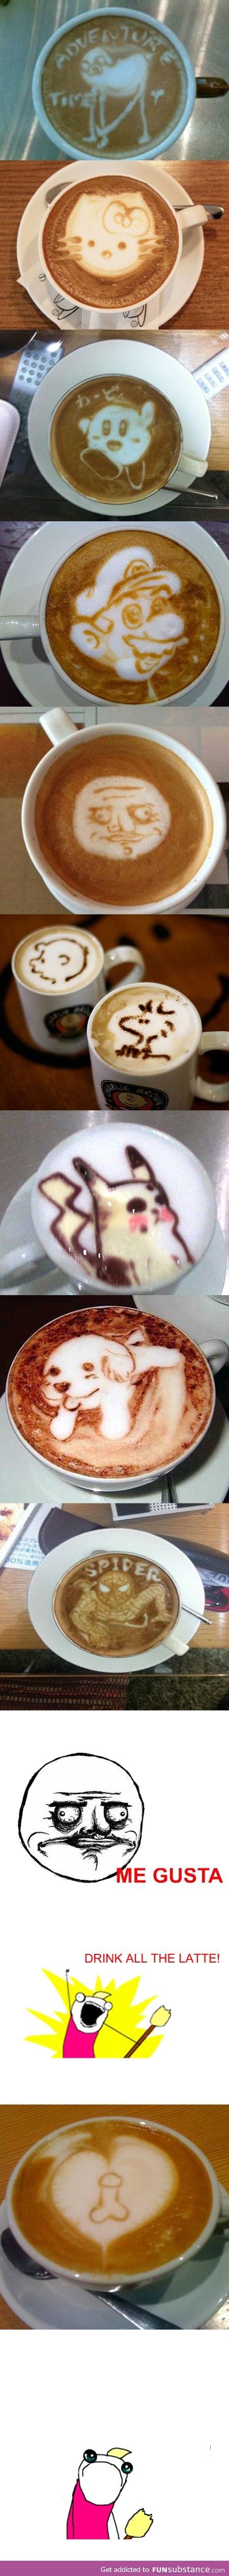 Some Amazing Latte Art